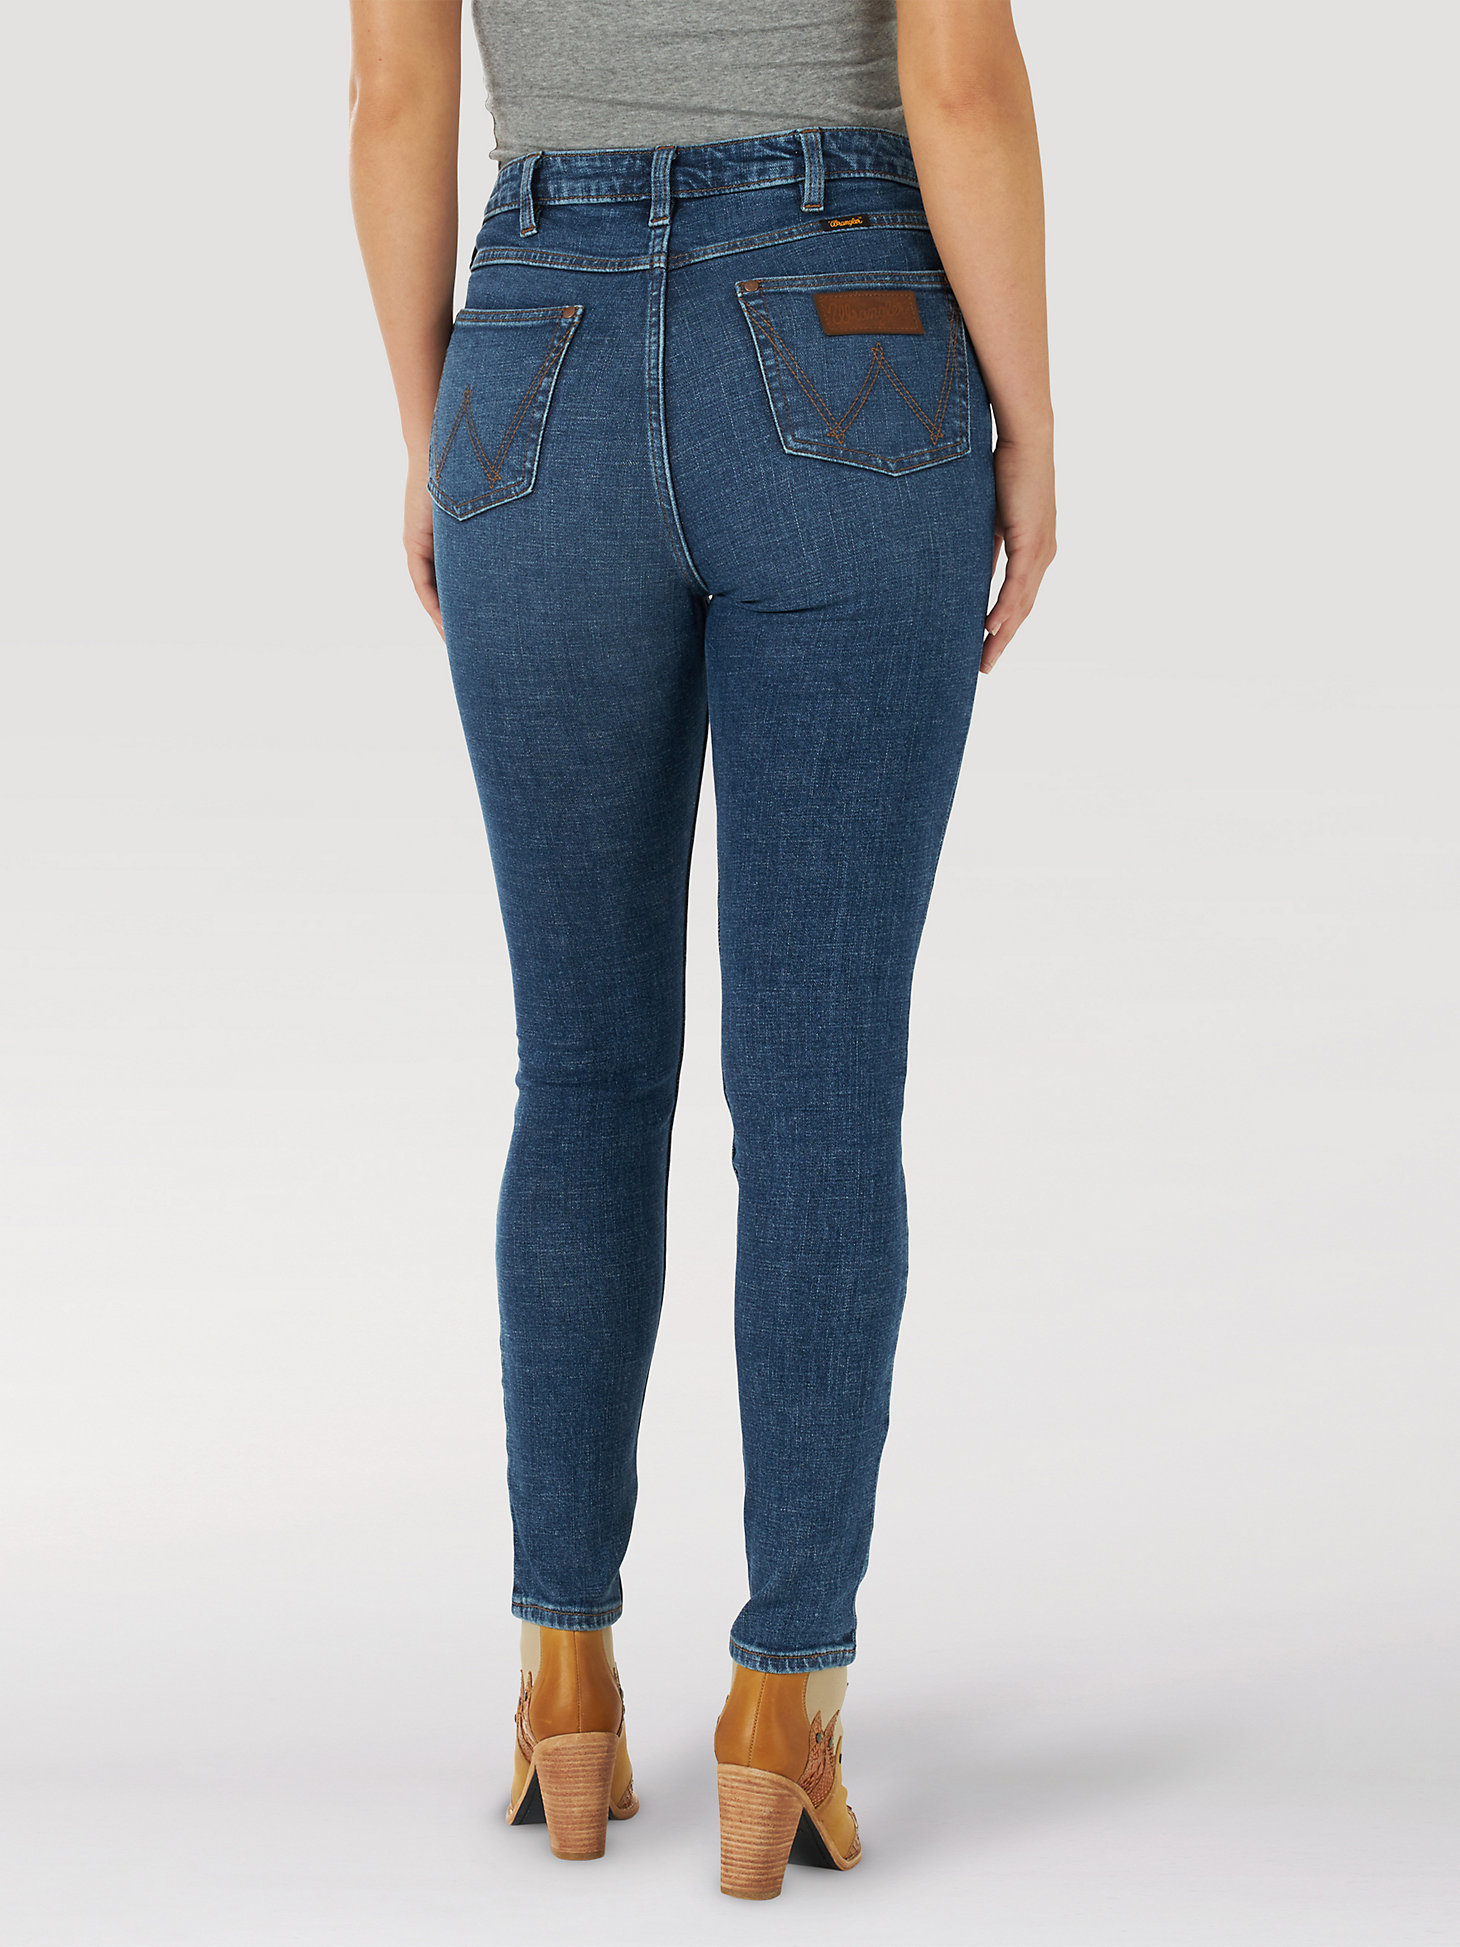 Wrangler Retro® Premium Jean: Women's High Rise Skinny in Annie alternative view 2